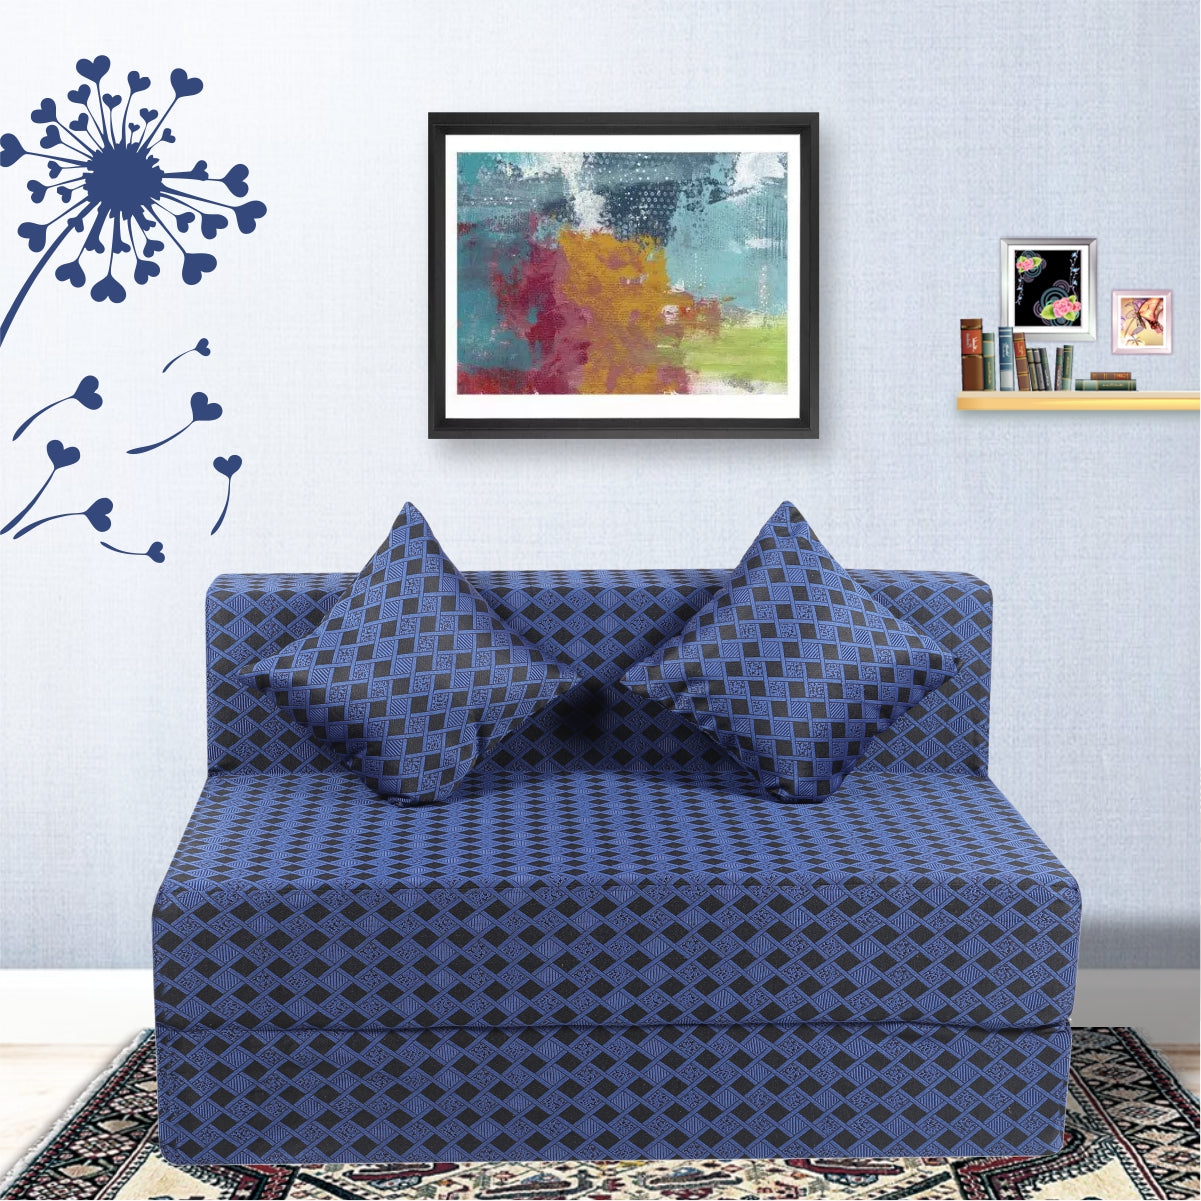 Seventh Heaven Blue Morphino Fabric 6×4 Sofa cum Bed with 2 Cushion